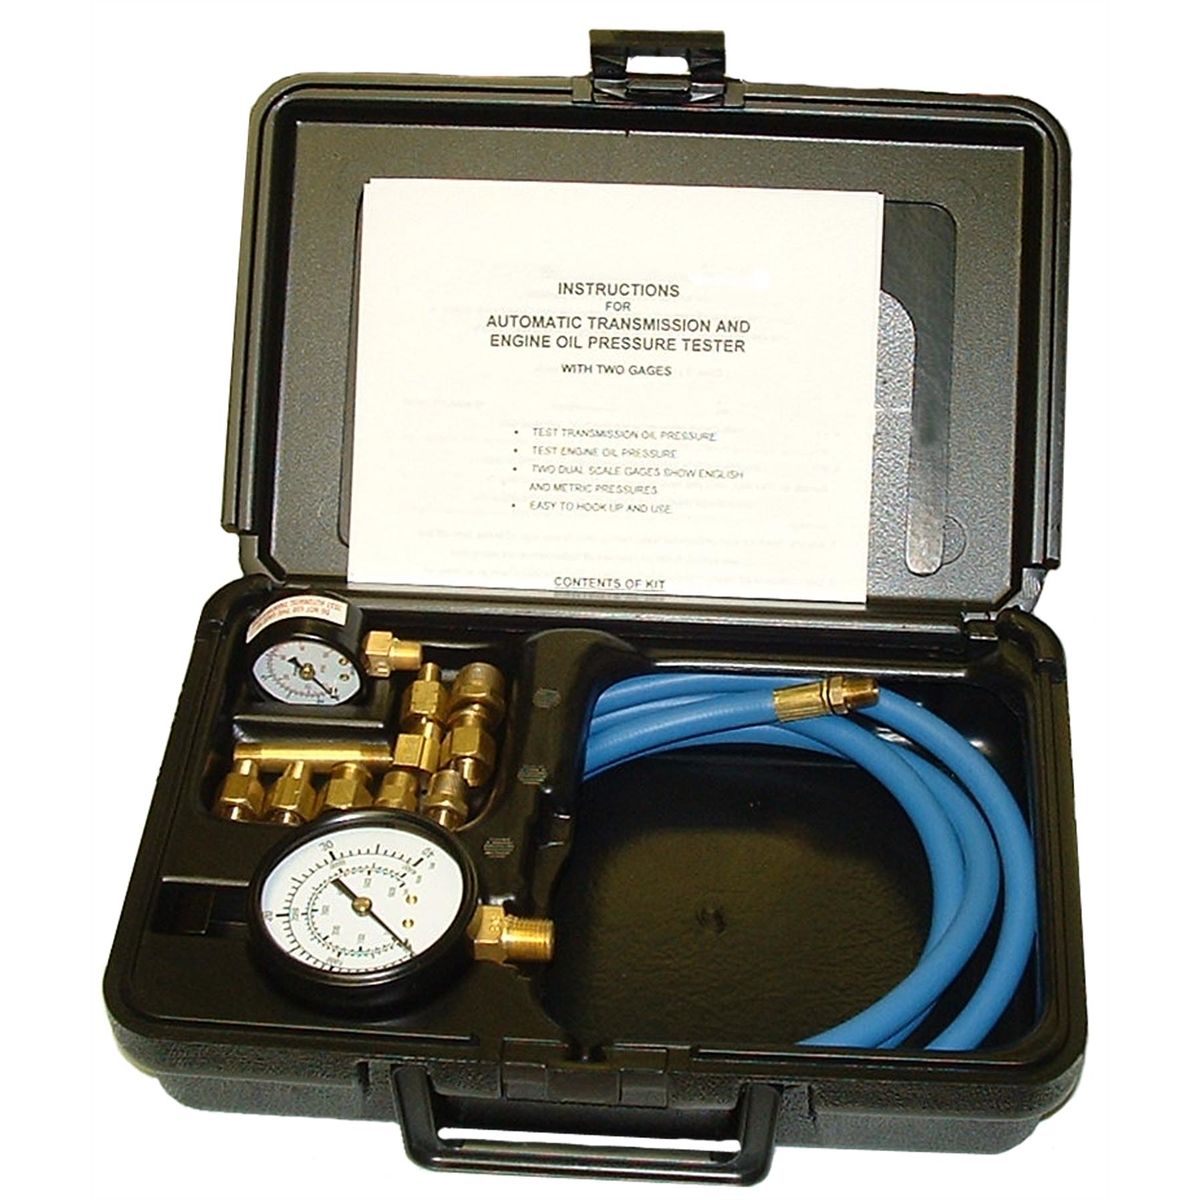 Oil Pressure Tester - Automatic Transmission & Engine